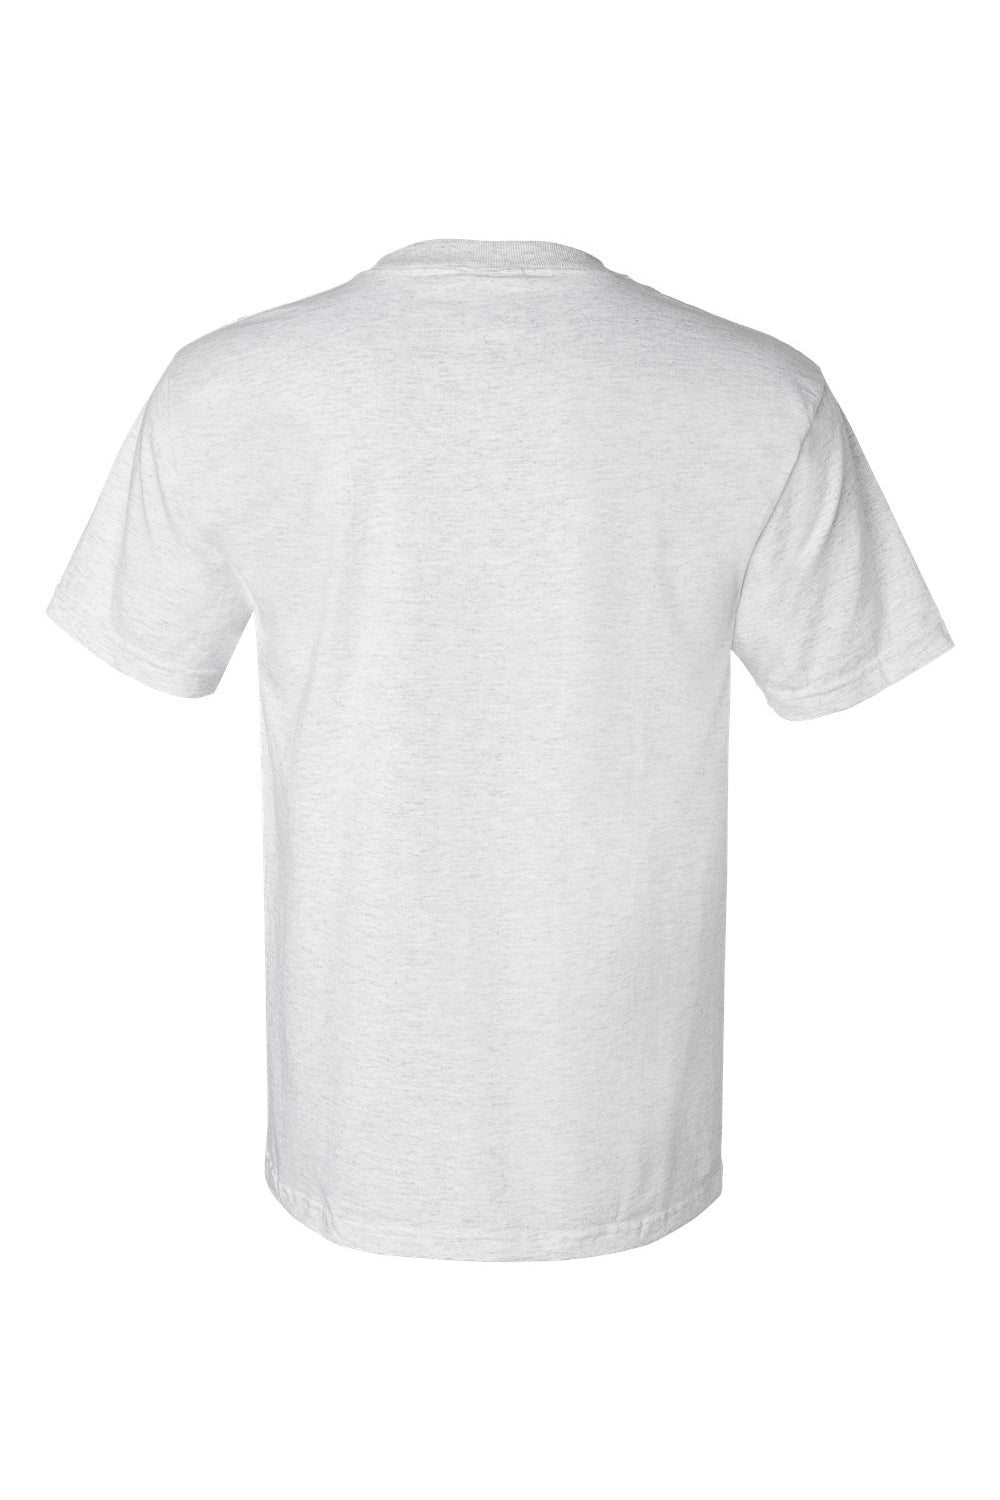 Bayside BA2905 Mens USA Made Short Sleeve Crewneck T-Shirt Ash Grey Flat Back